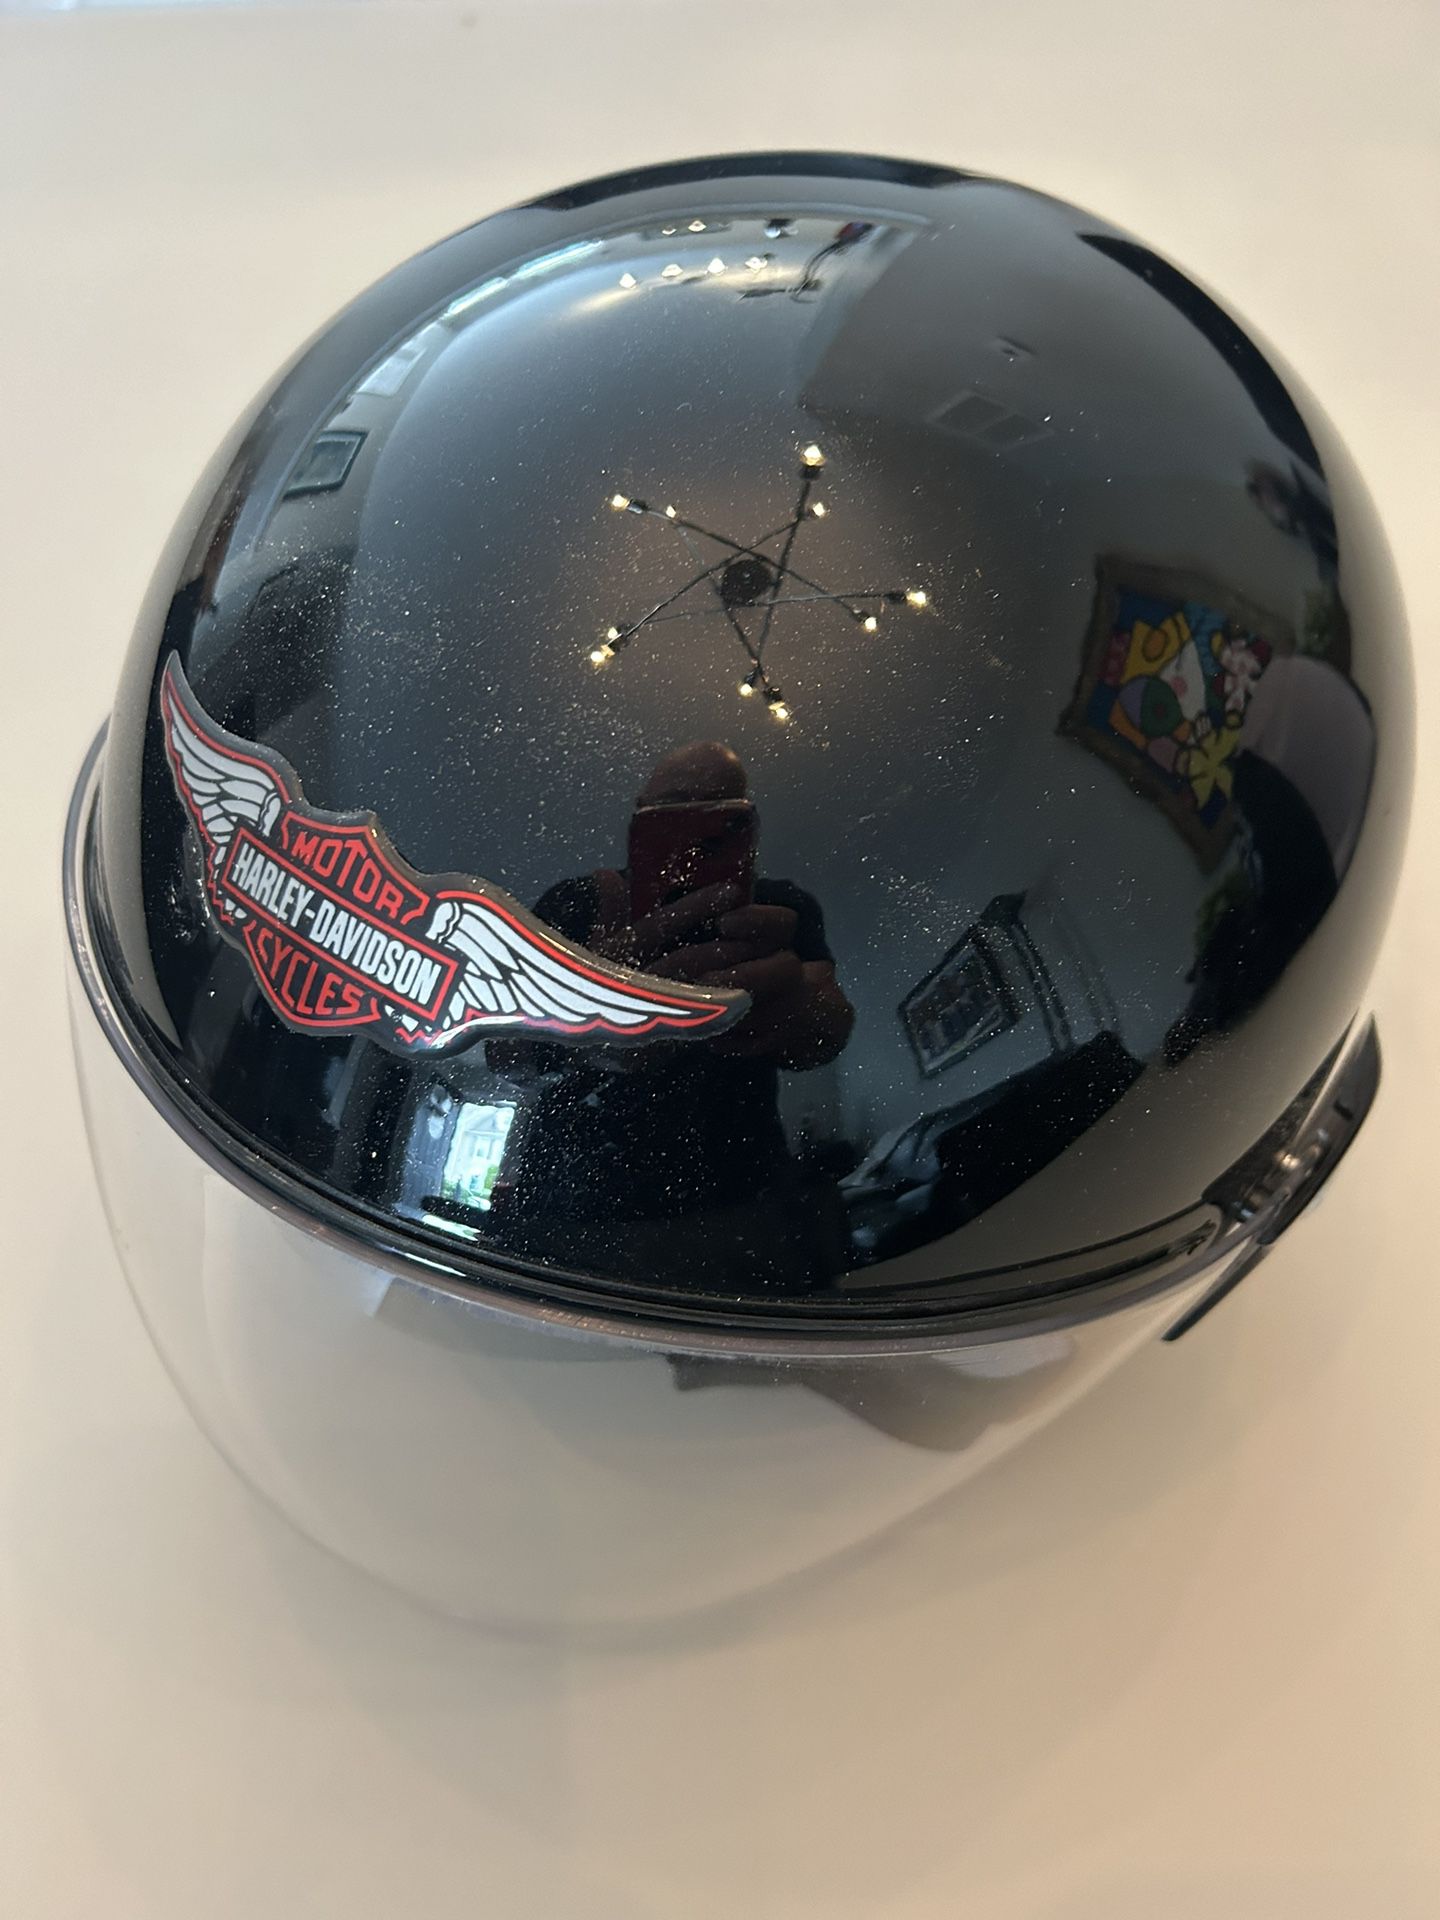 Woman’s Harley Davidson helmet (small)